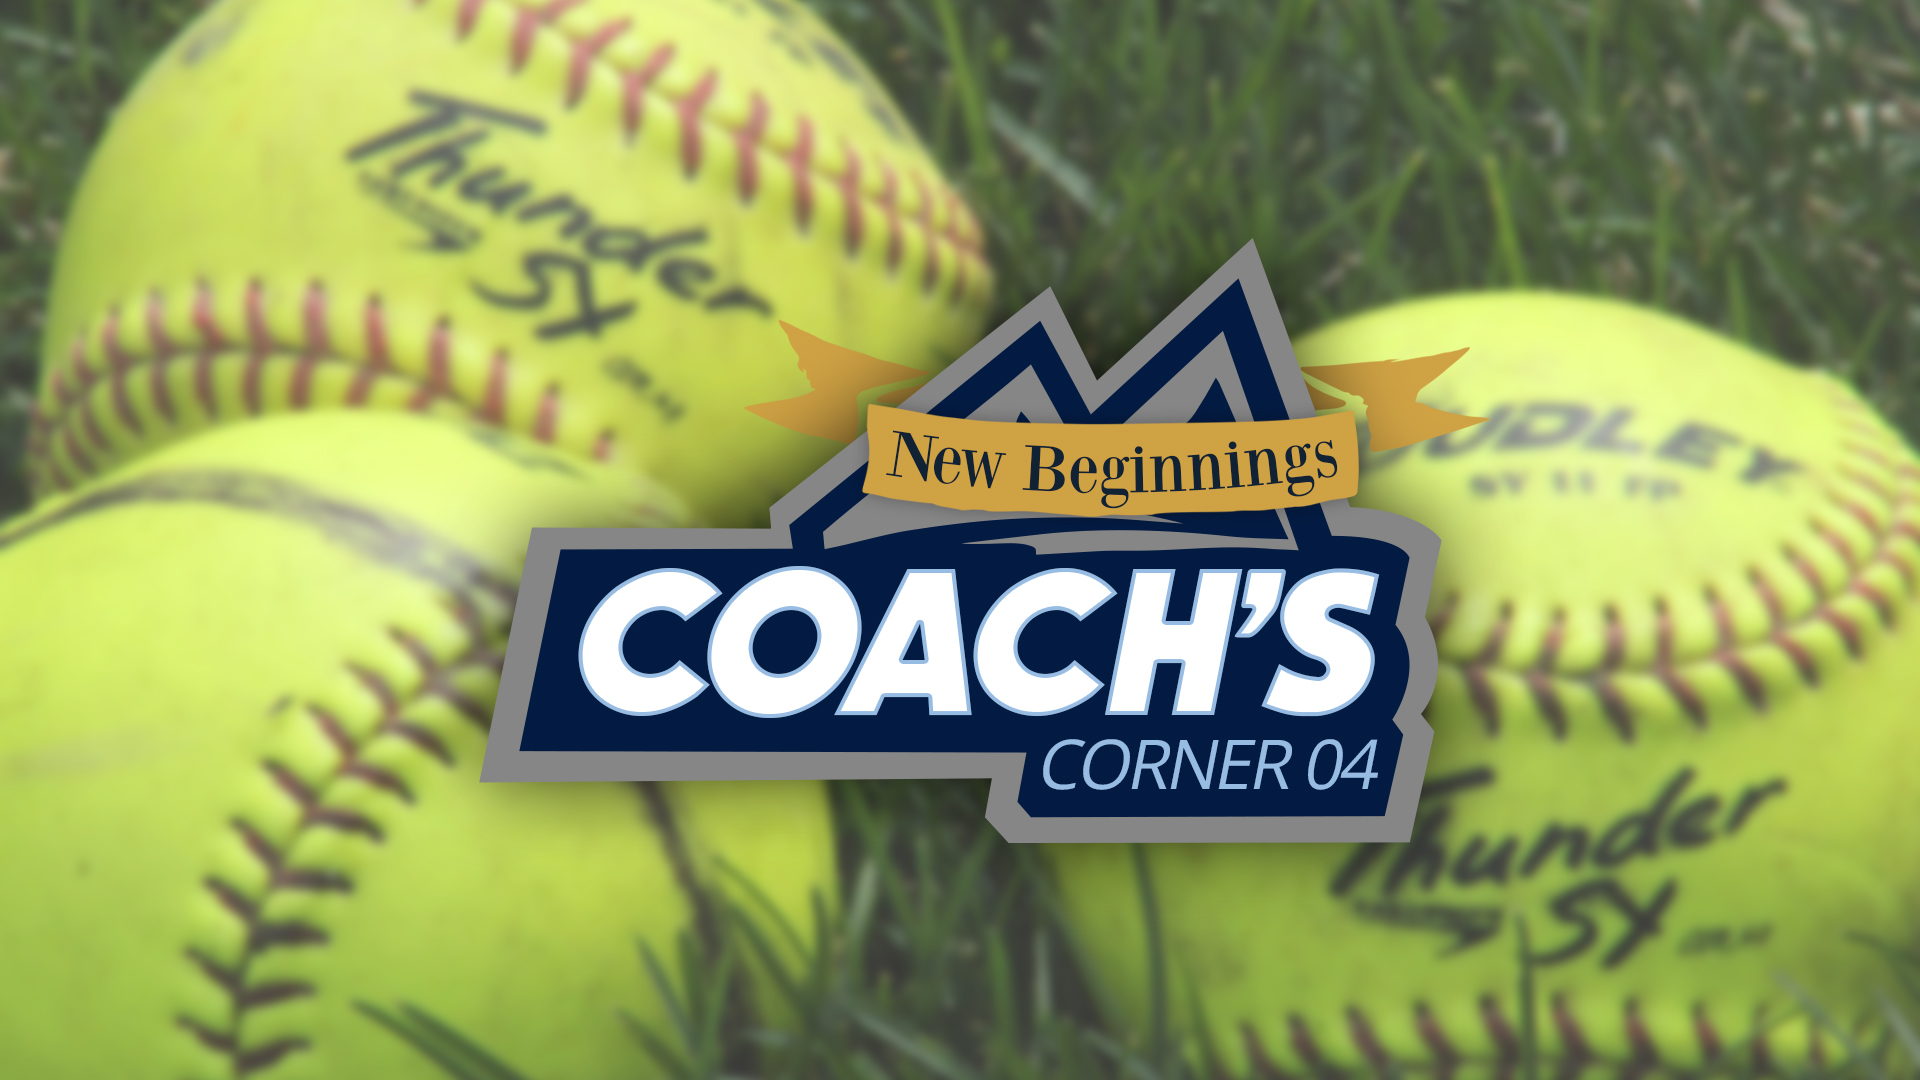 Coach’s Corner 04: New Beginnings